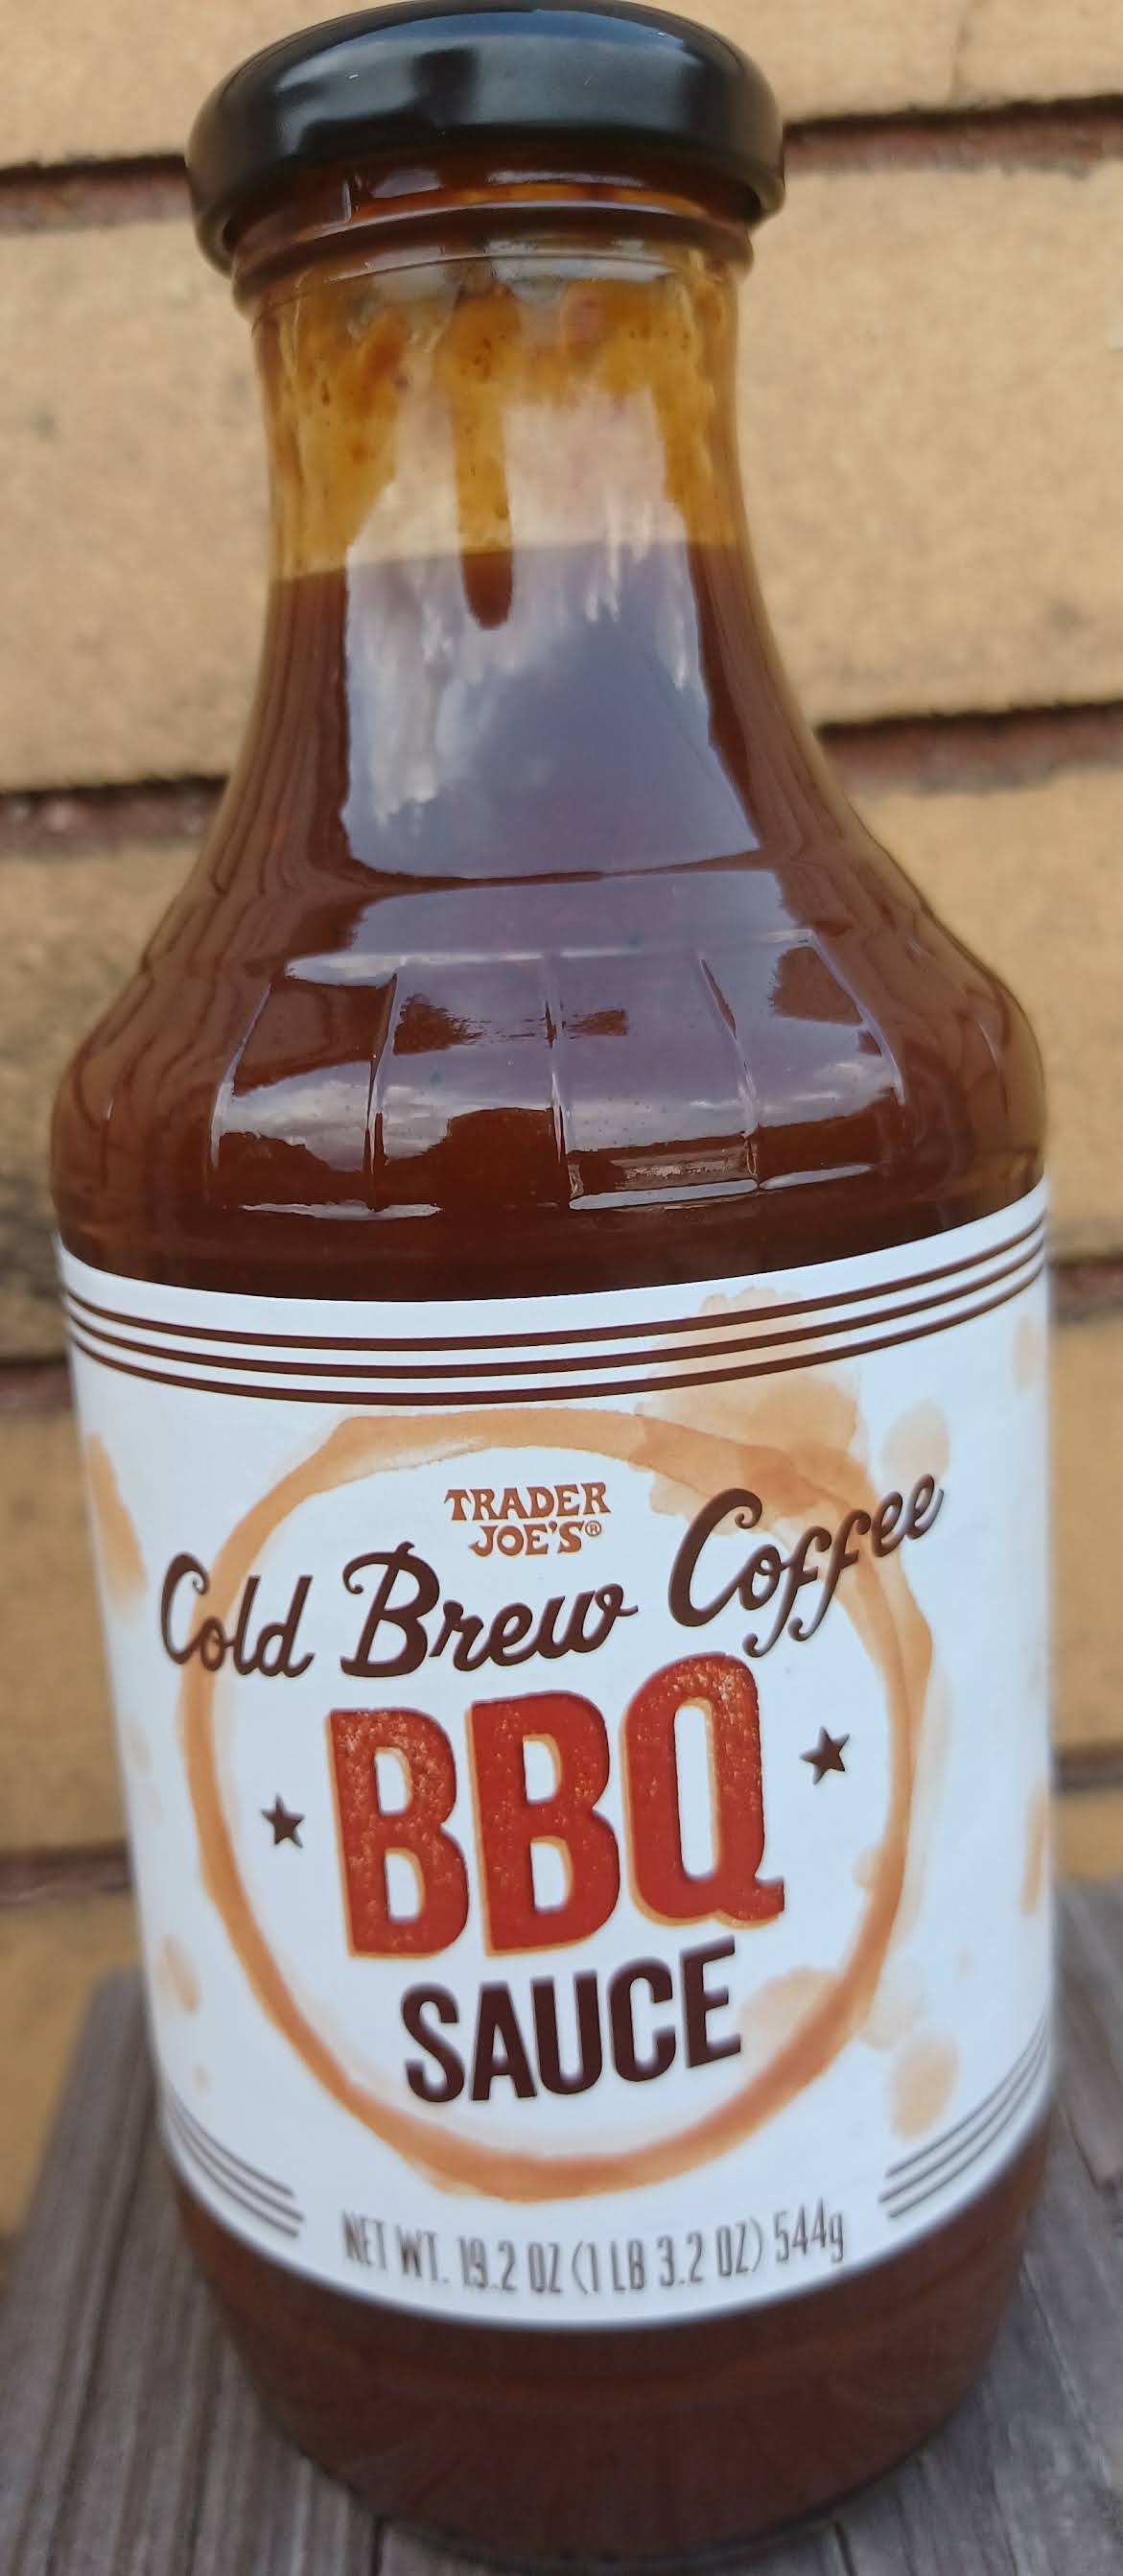 We Tried Trader Joe's Cold Brew Coffee BBQ Sauce - DailyWaffle